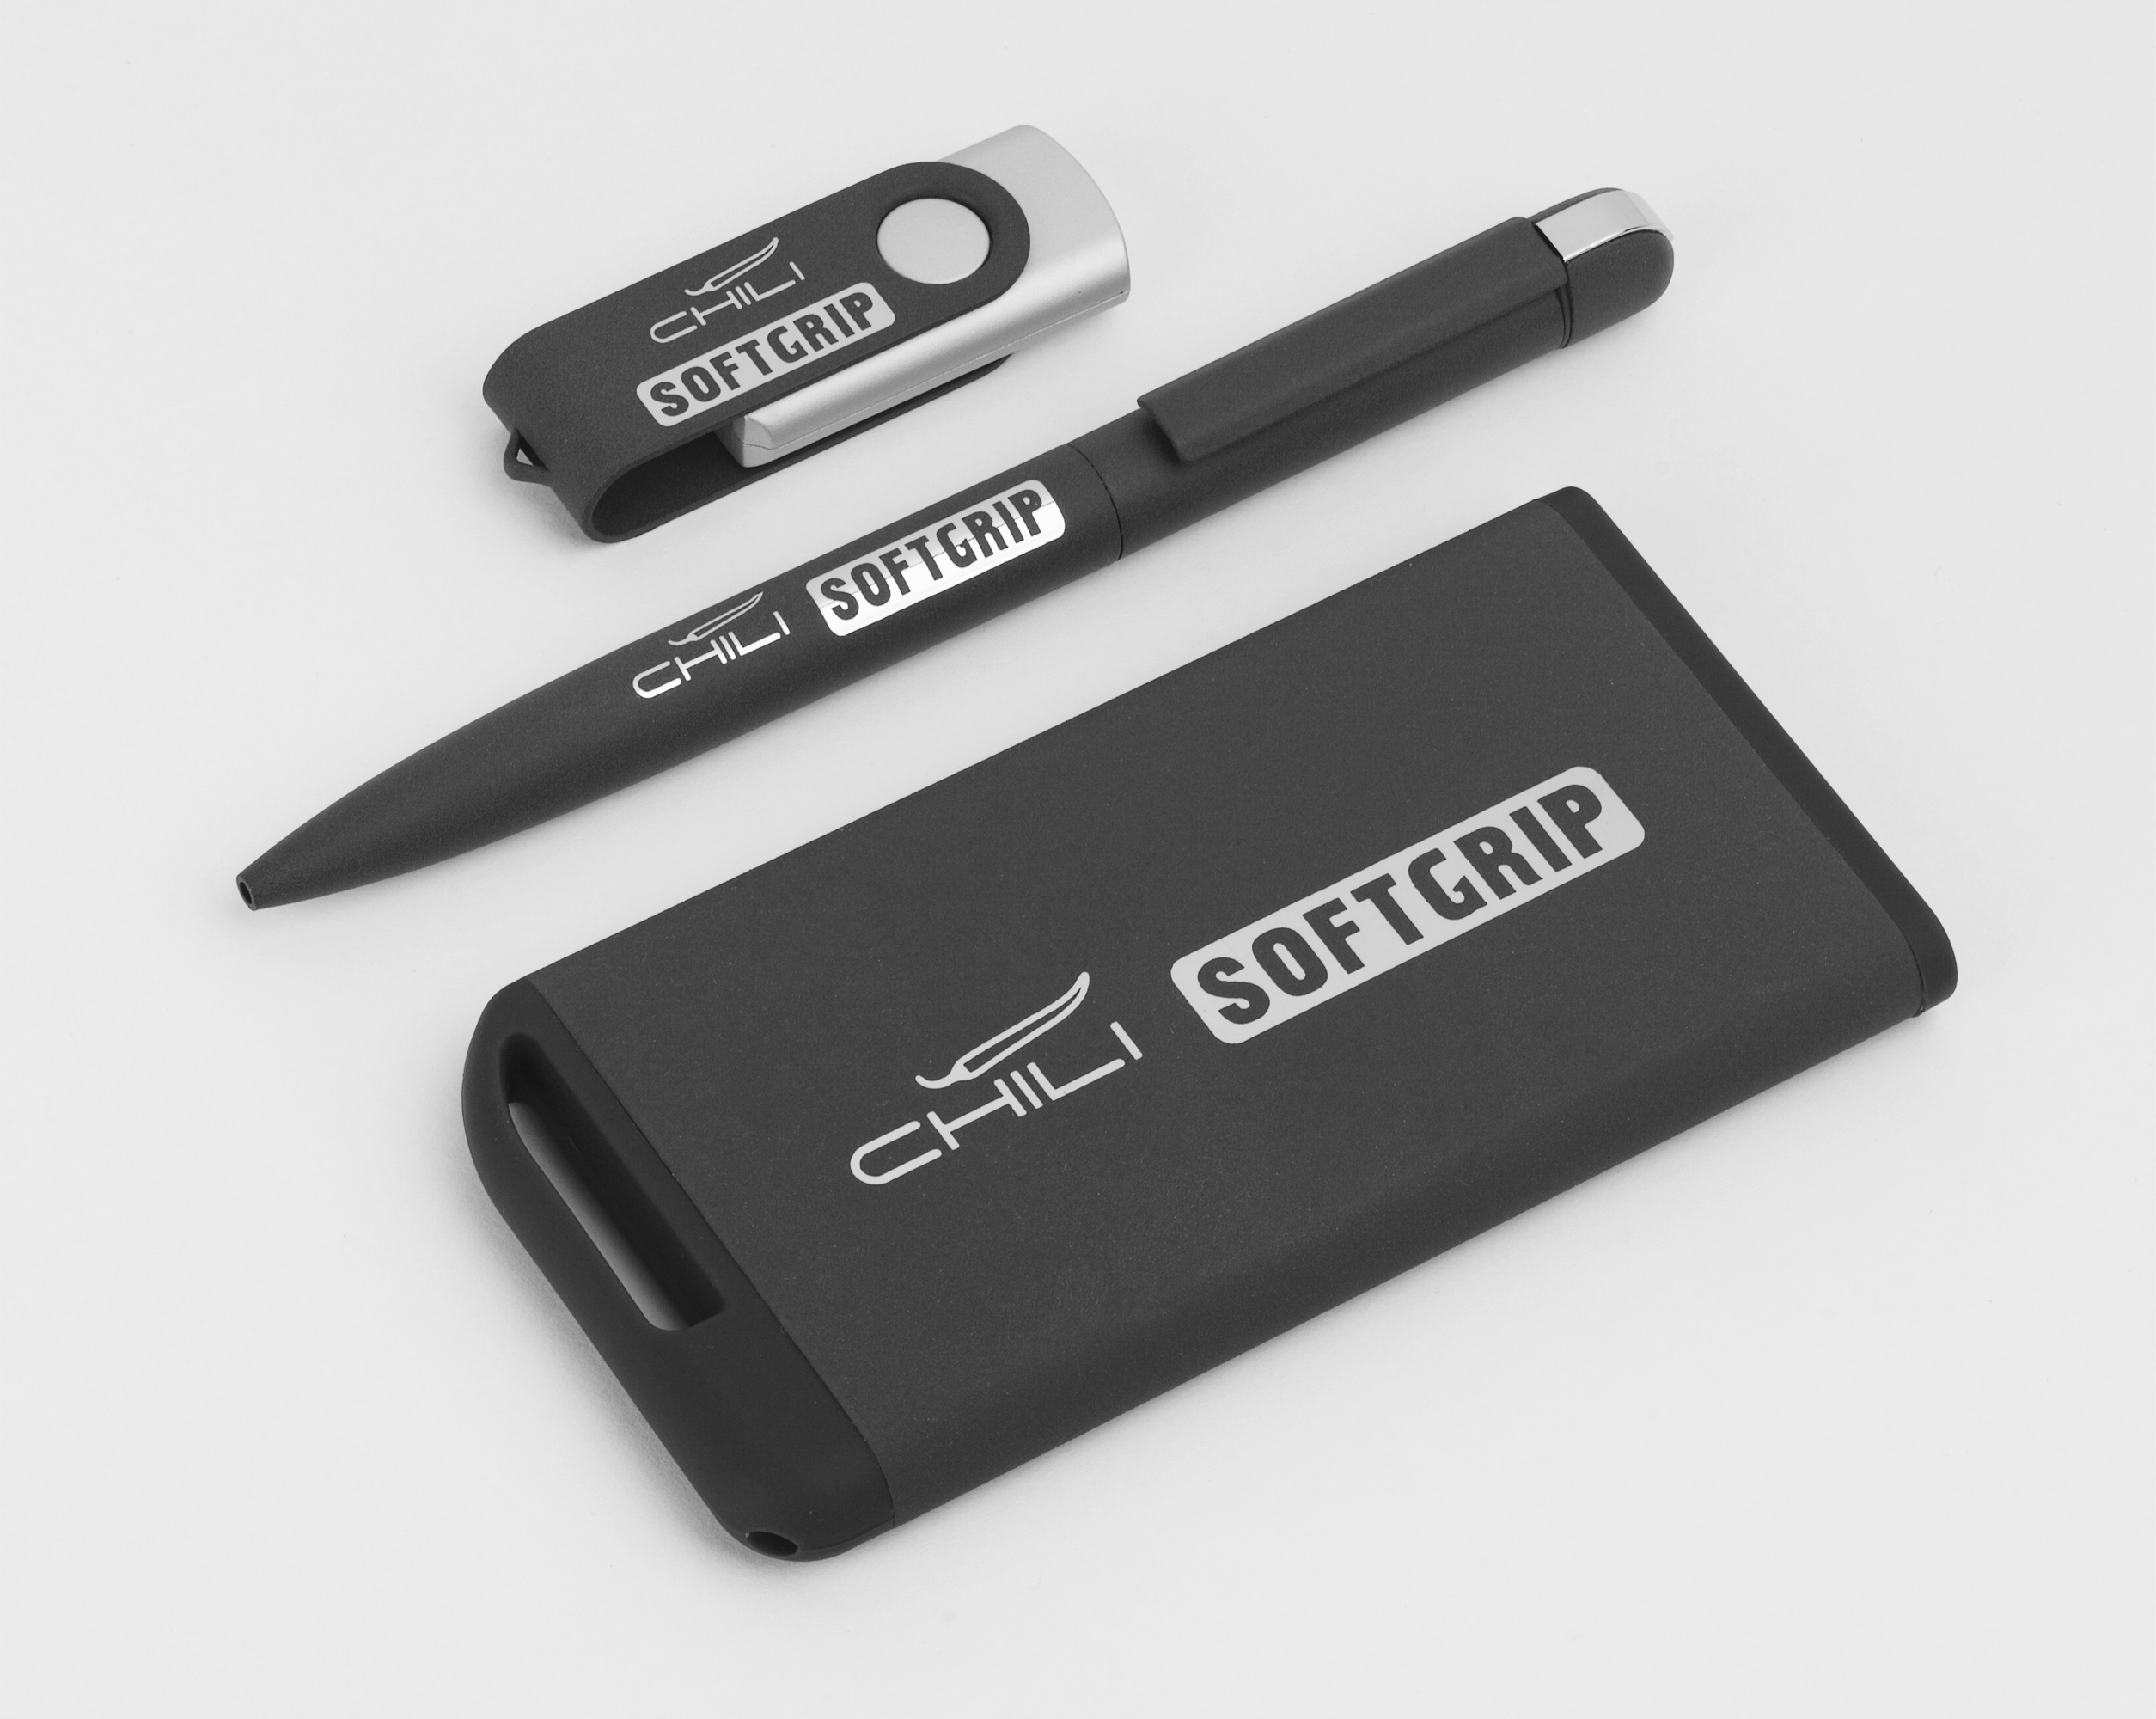 Набор ручка + флеш-карта 16Гб + зарядное устройство 4000 mAh в футляре, softgrip